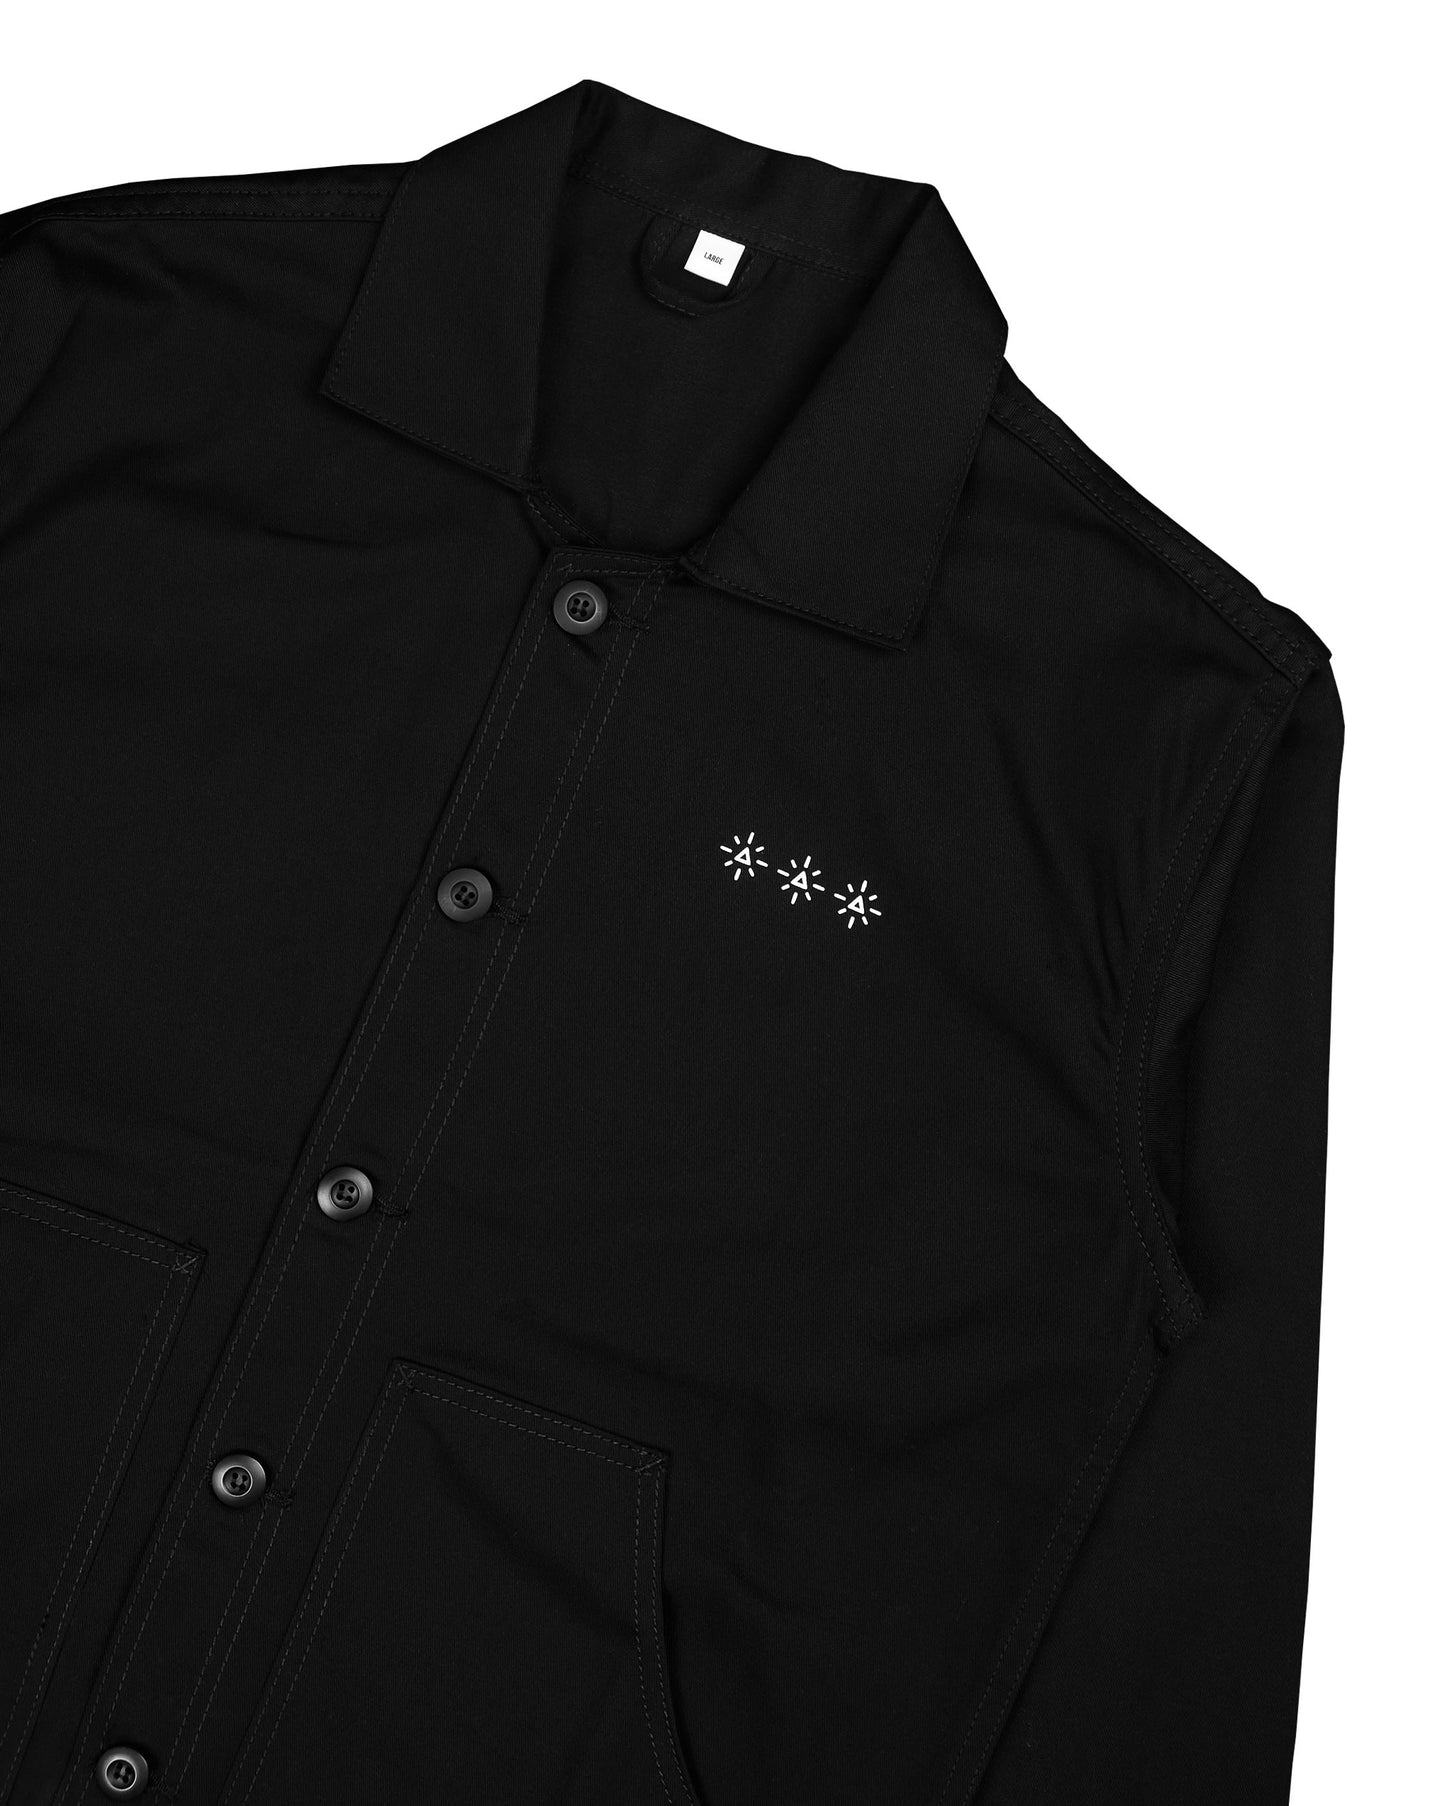 Rabanit III Black - Relaxed Fit Jacket